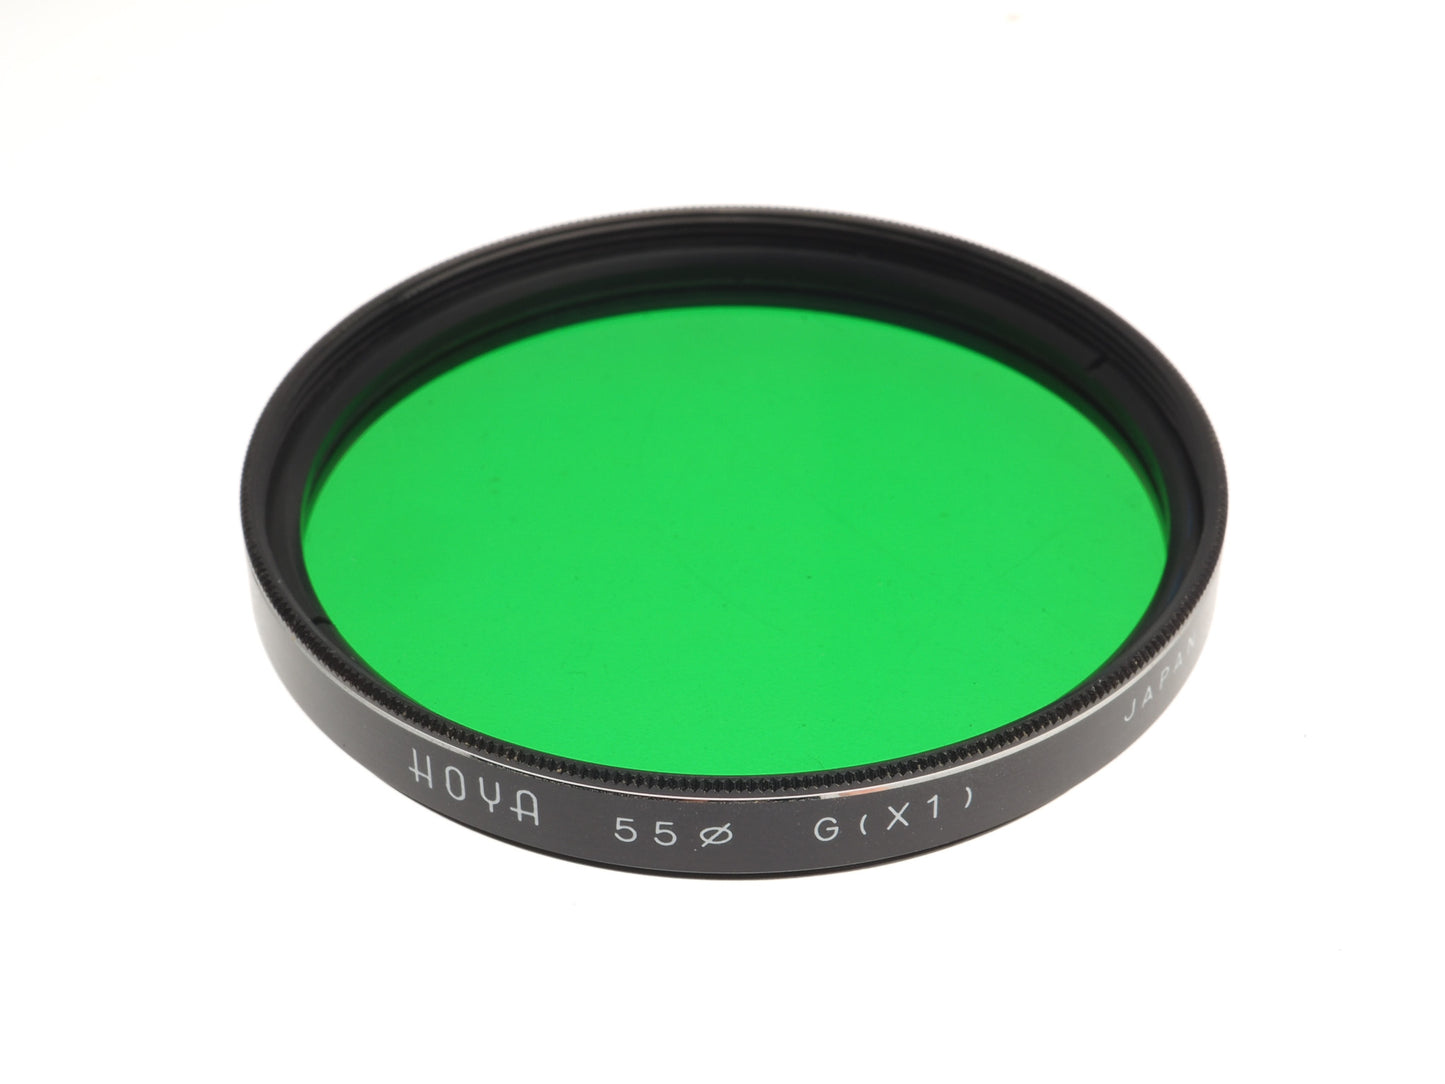 Hoya 55mm Green Filter G (x1) - Accessory